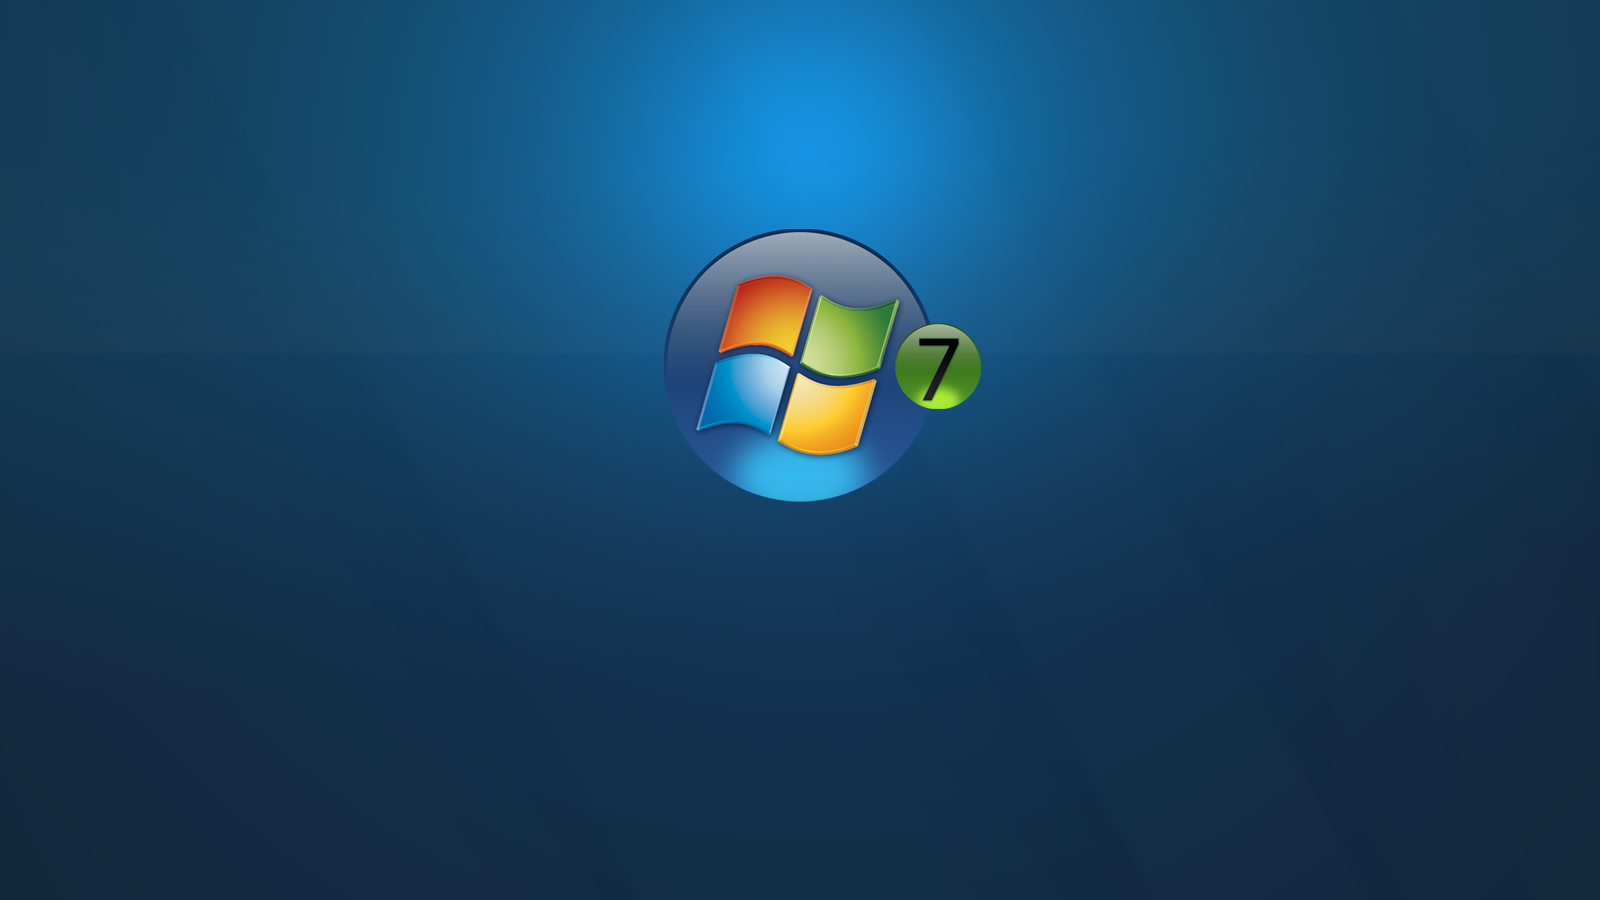 Windows 7 Wallpapers 1600x900